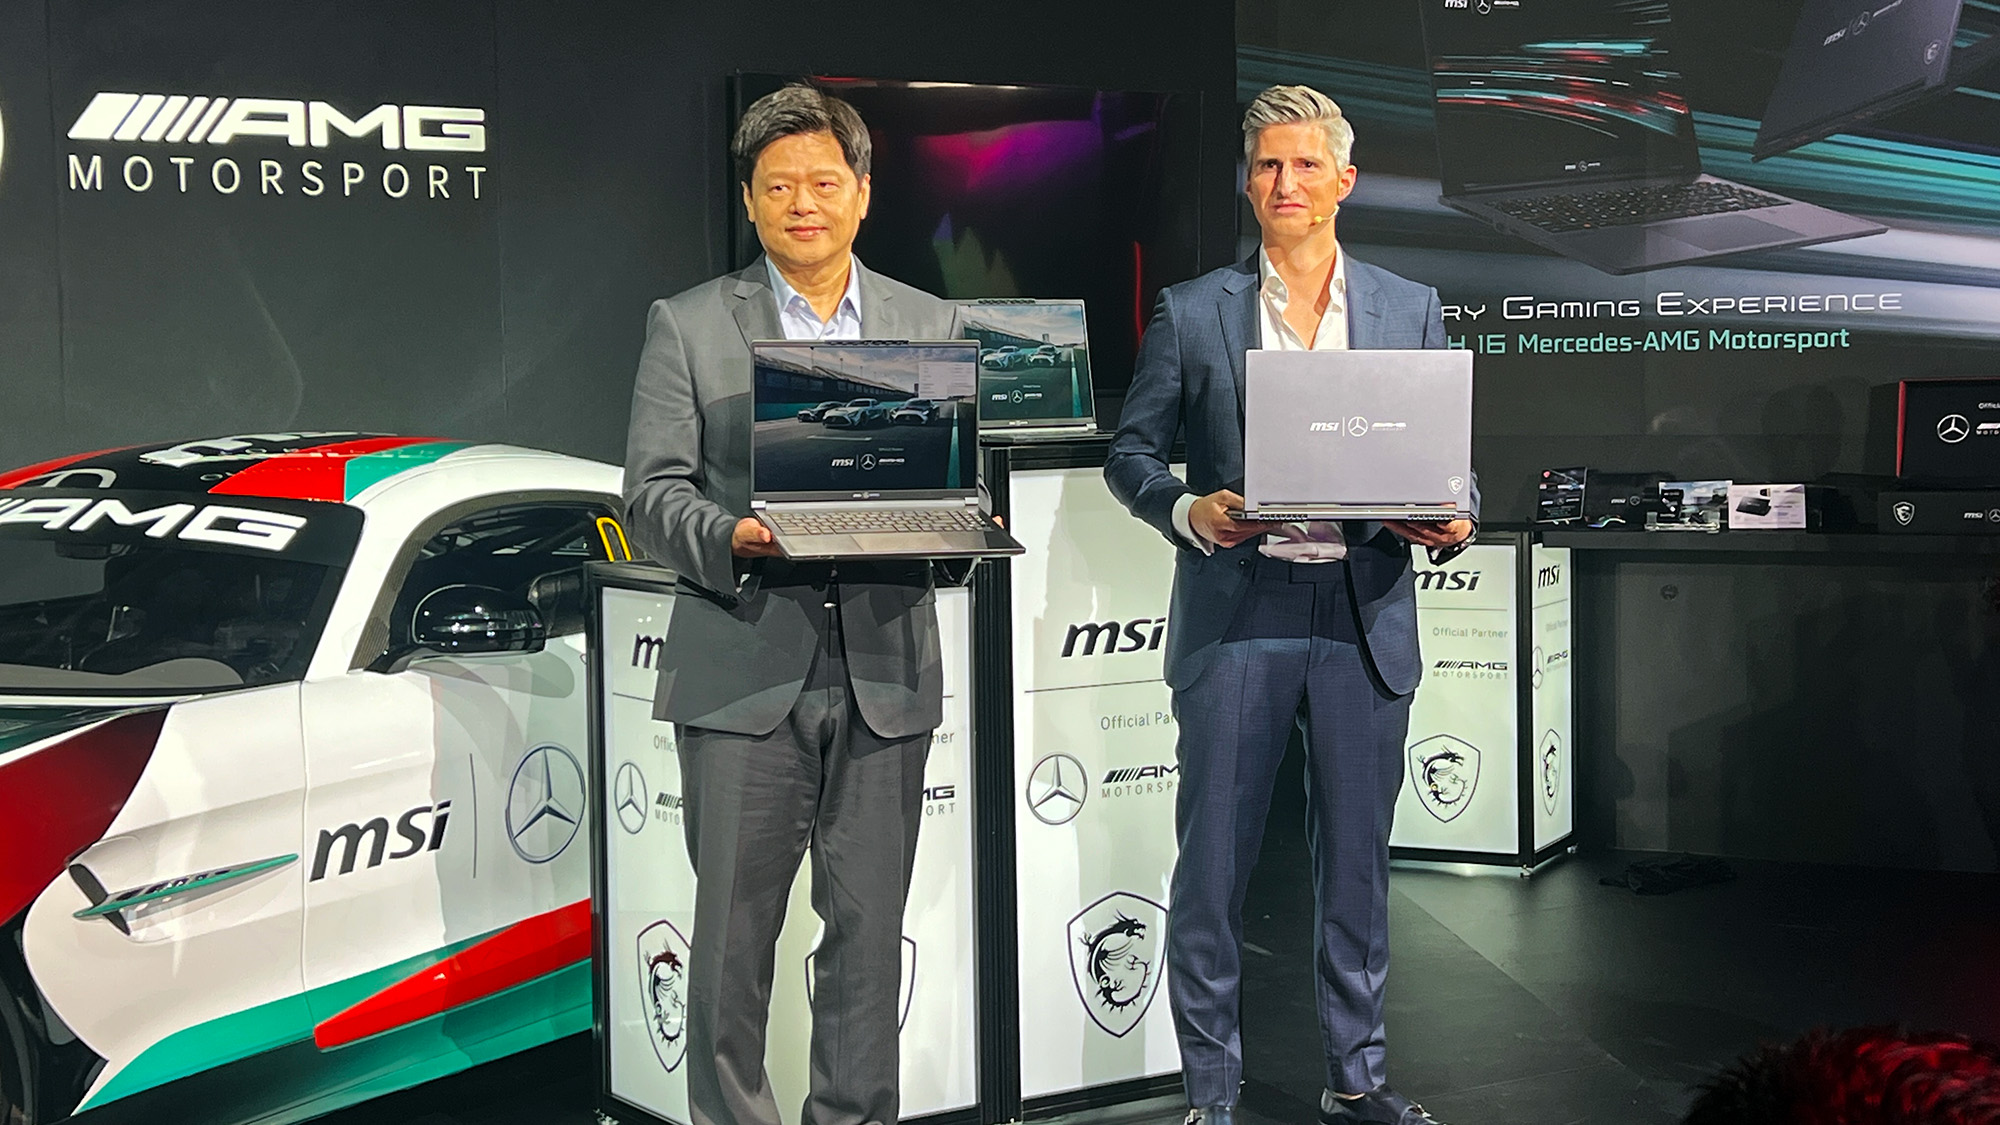 MSI and Mercedes-AMG Motorsport executives showing off the MSI Stealth 16 Mercedes-AMG Motorsport laptop